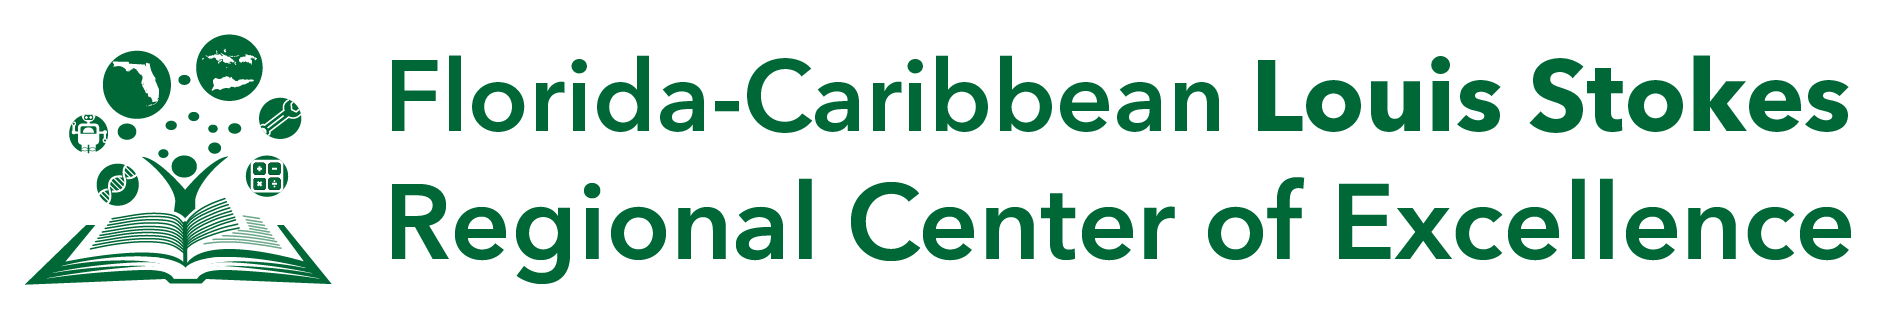 Florida-Caribbean Louis Stokes Regional Center of Excellence